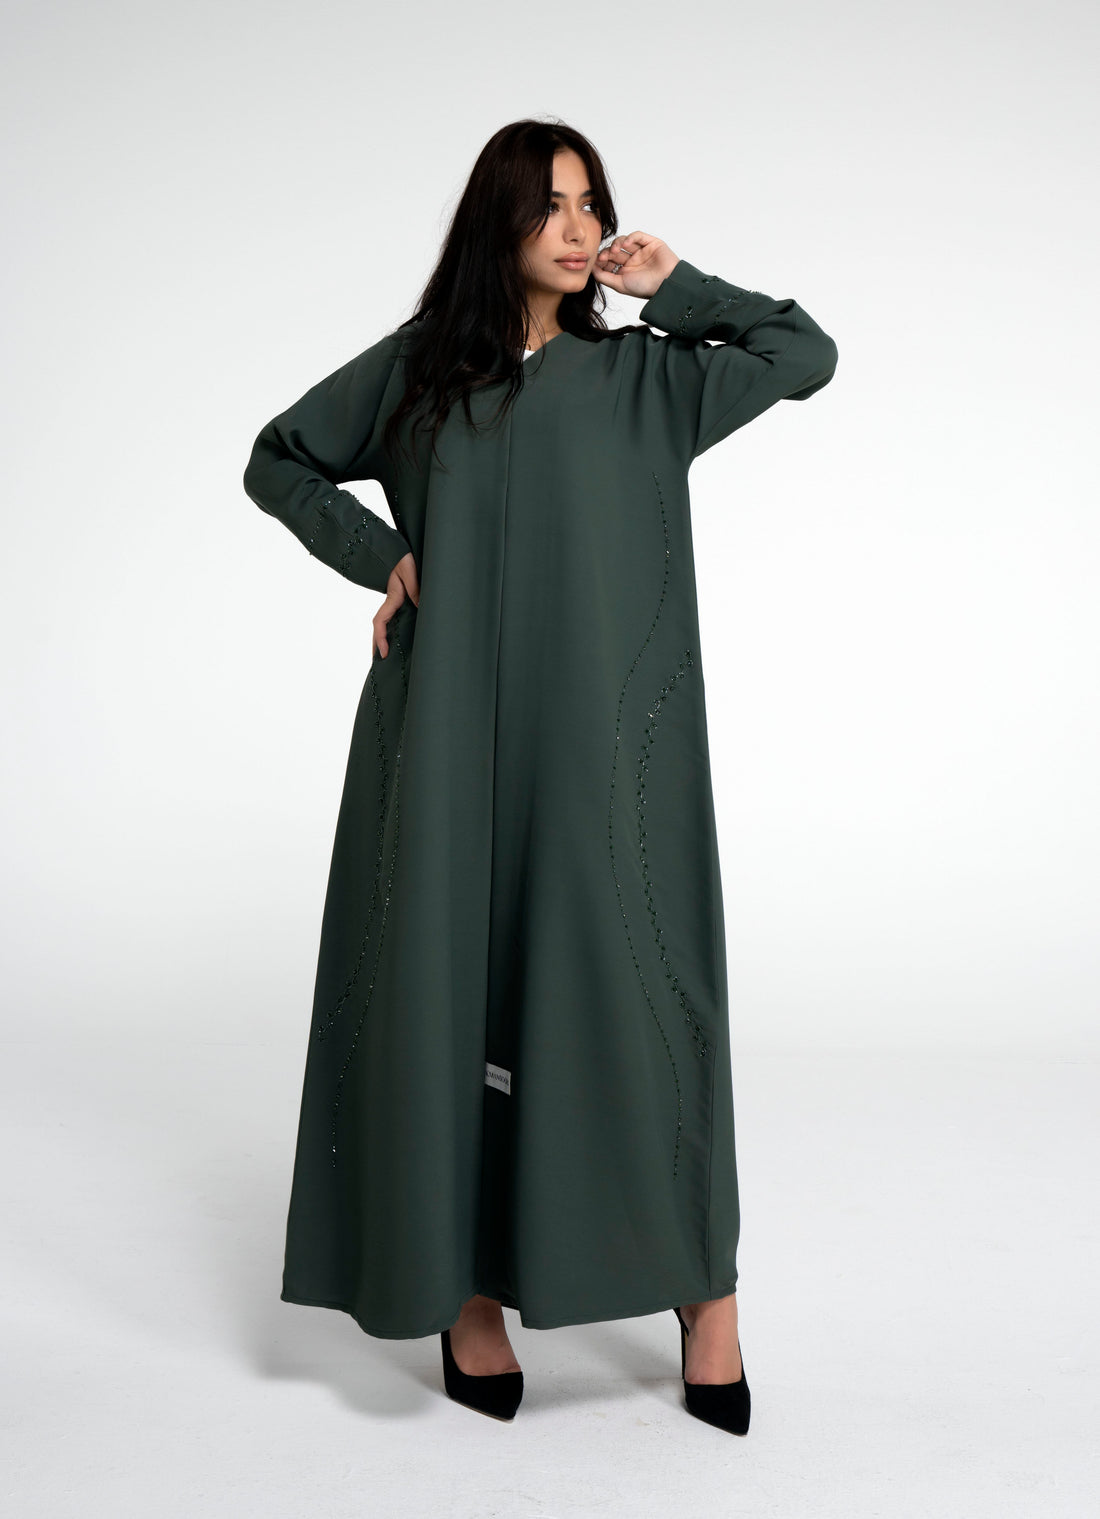 How To Style These Fabulous Green Abayas? – kmansooriabayas